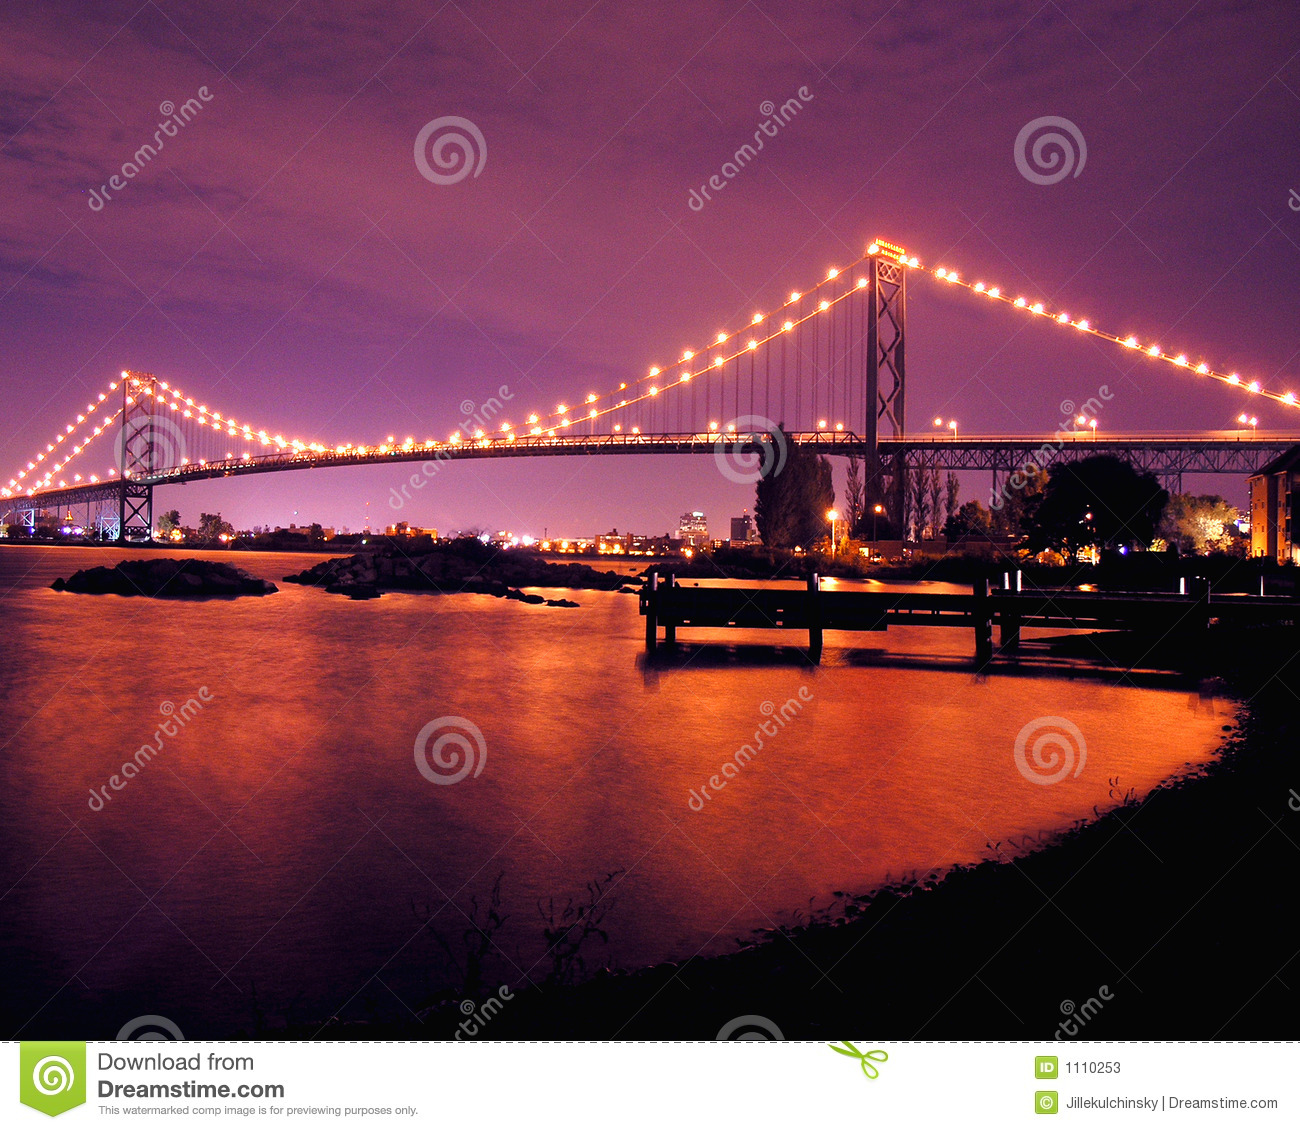 Amazing Ambassador Bridge Pictures & Backgrounds